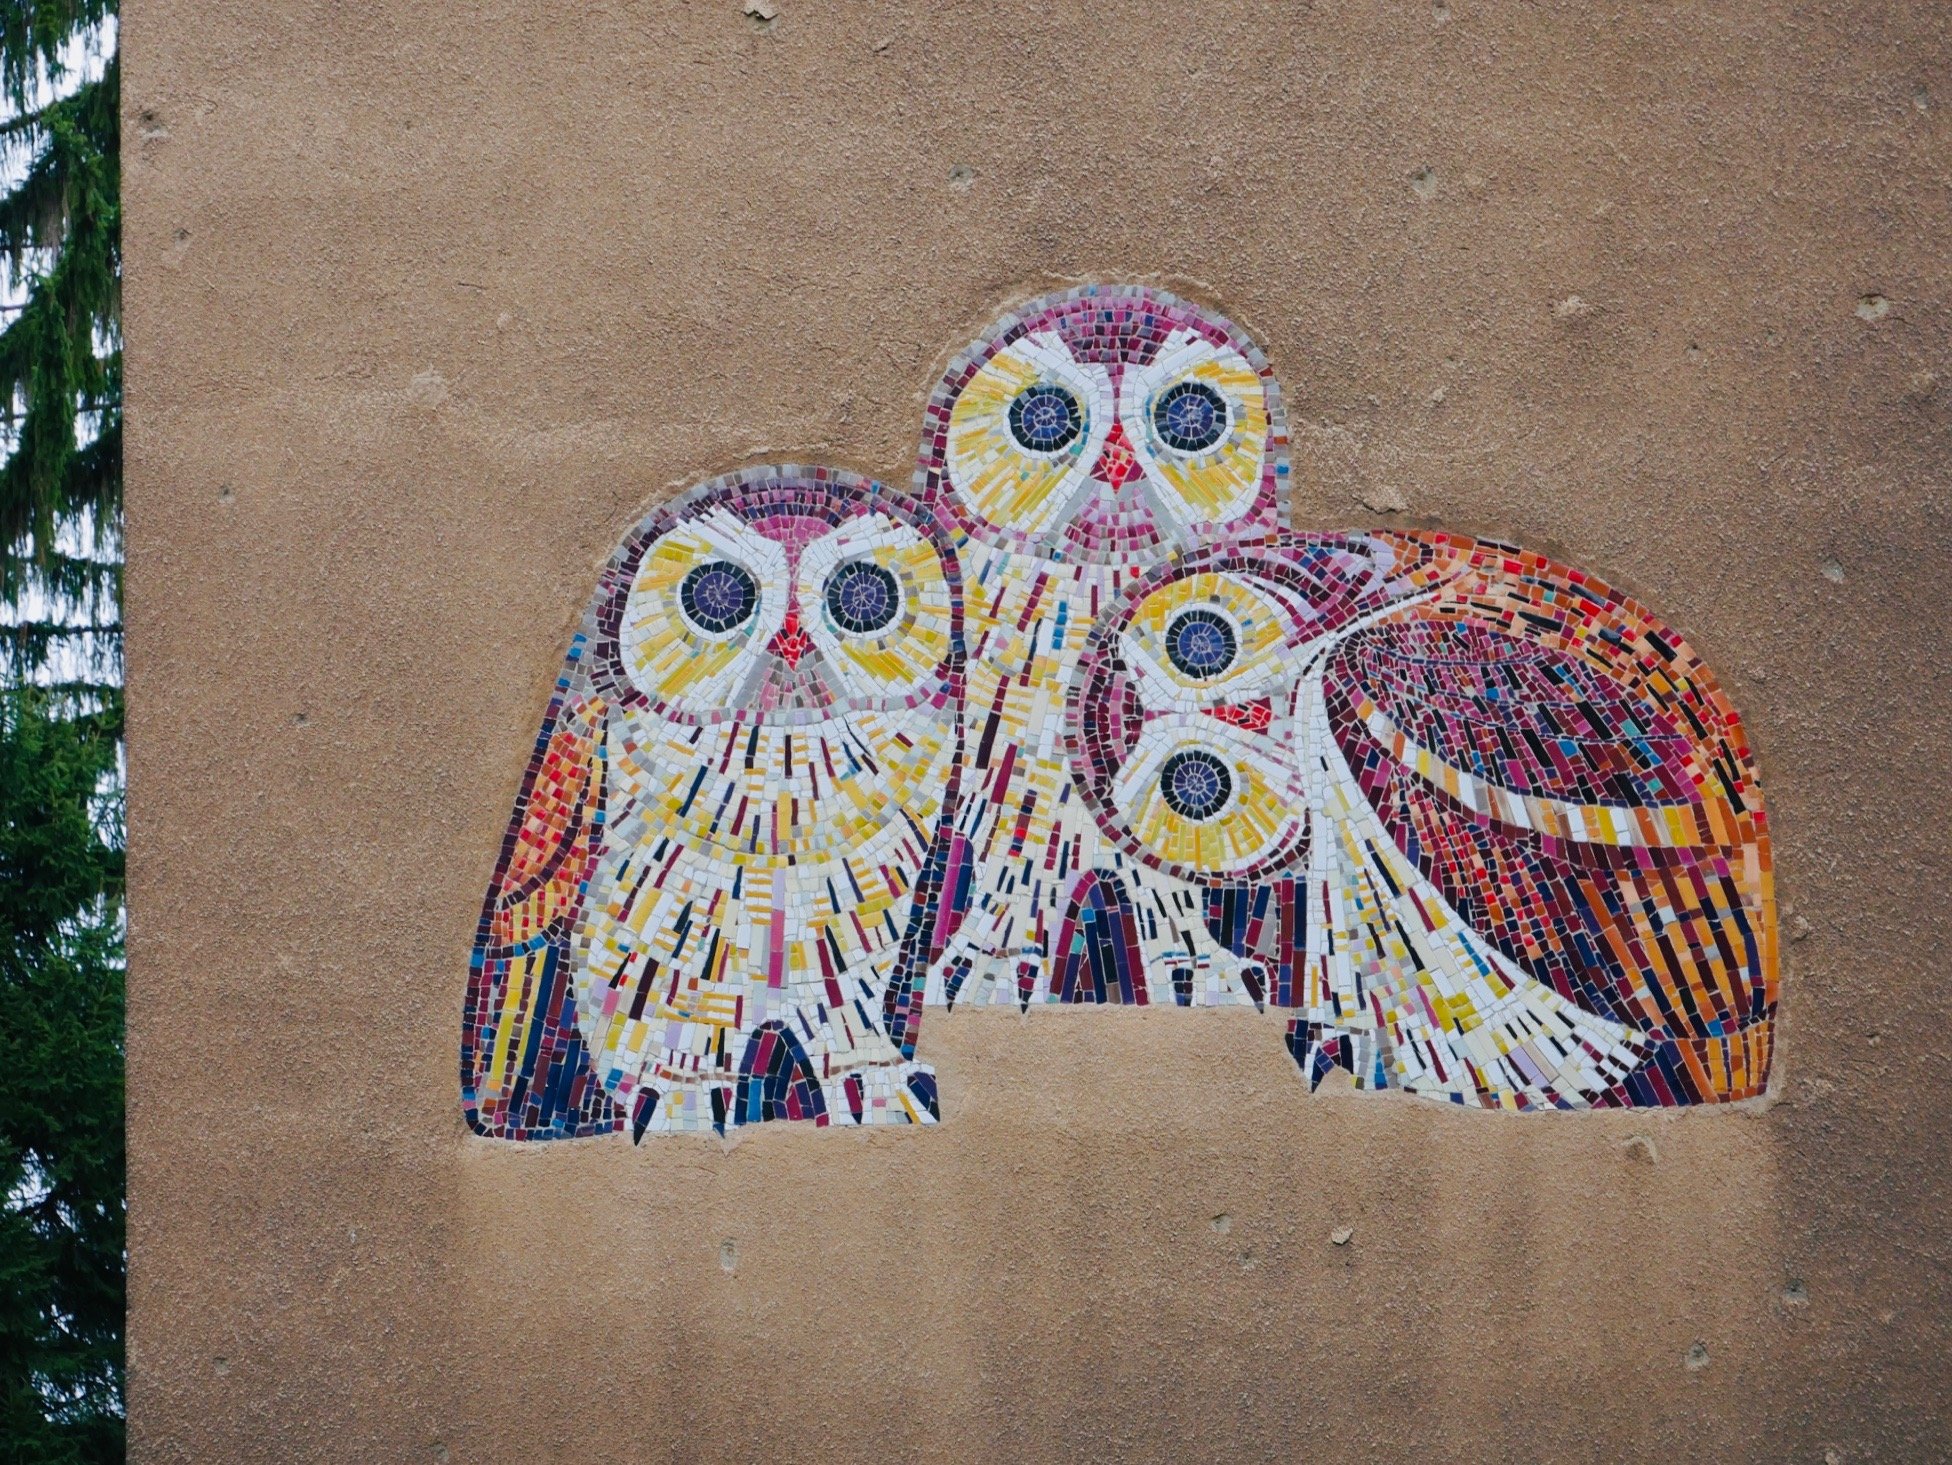 our city became a canvas nika magazin mozaic owl .jpg